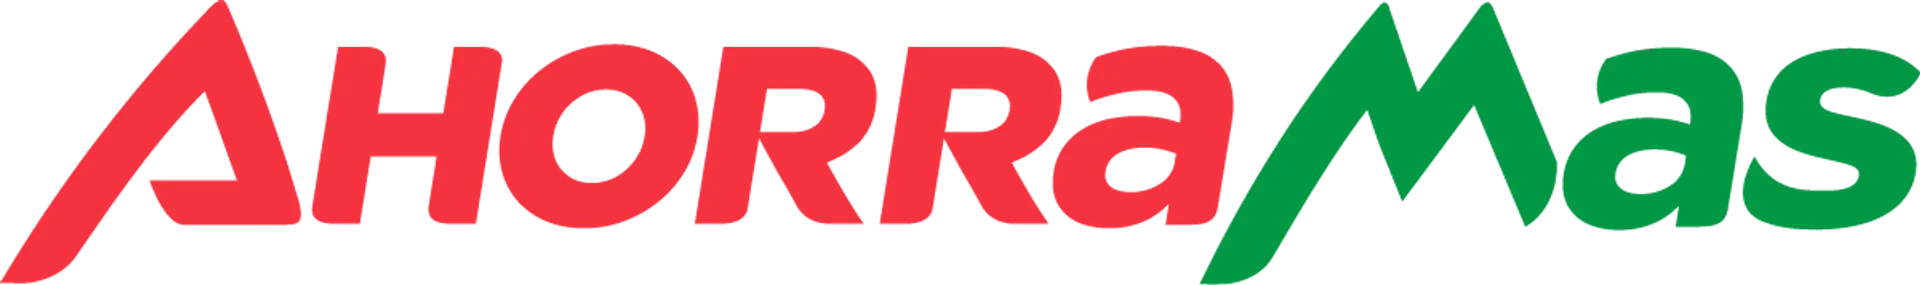 AHORRAMAS logo